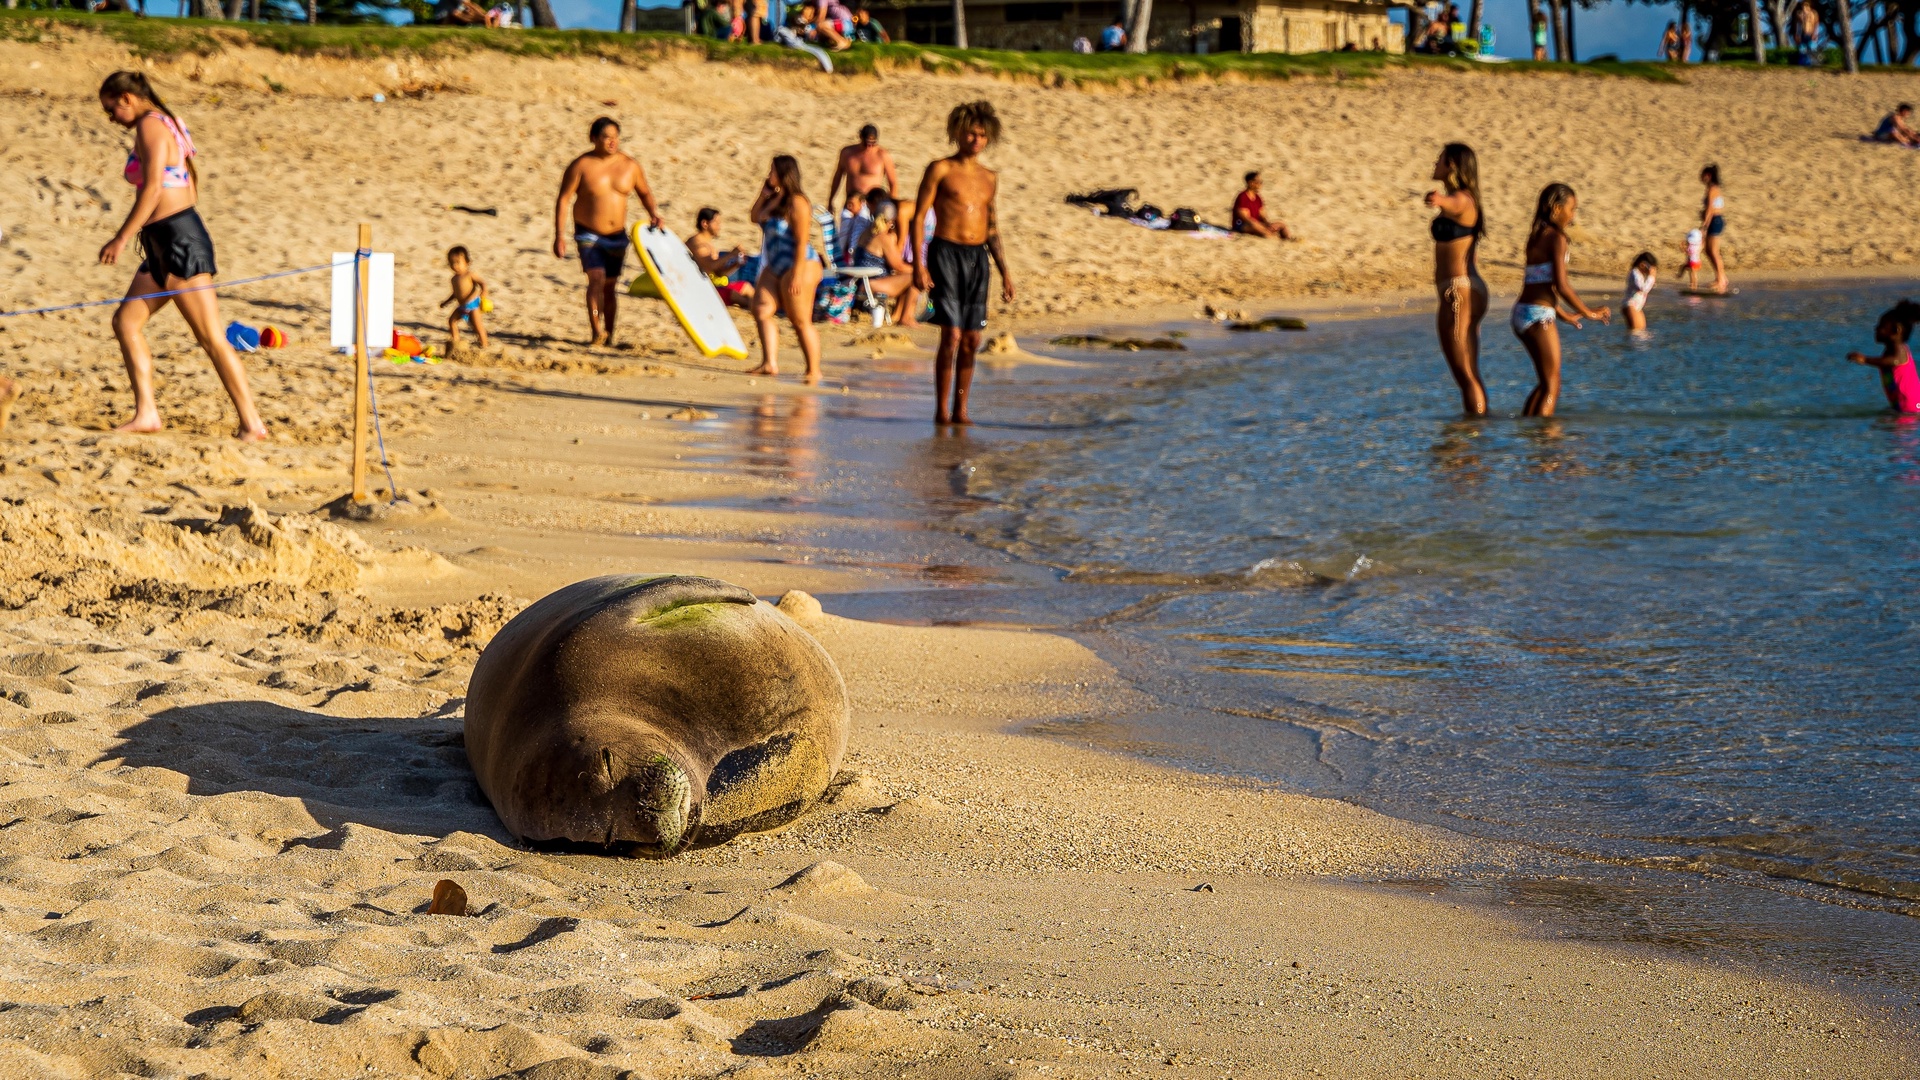 Kapolei Vacation Rentals, Kai Lani 21C - A peaceful nap on the shores of the island.